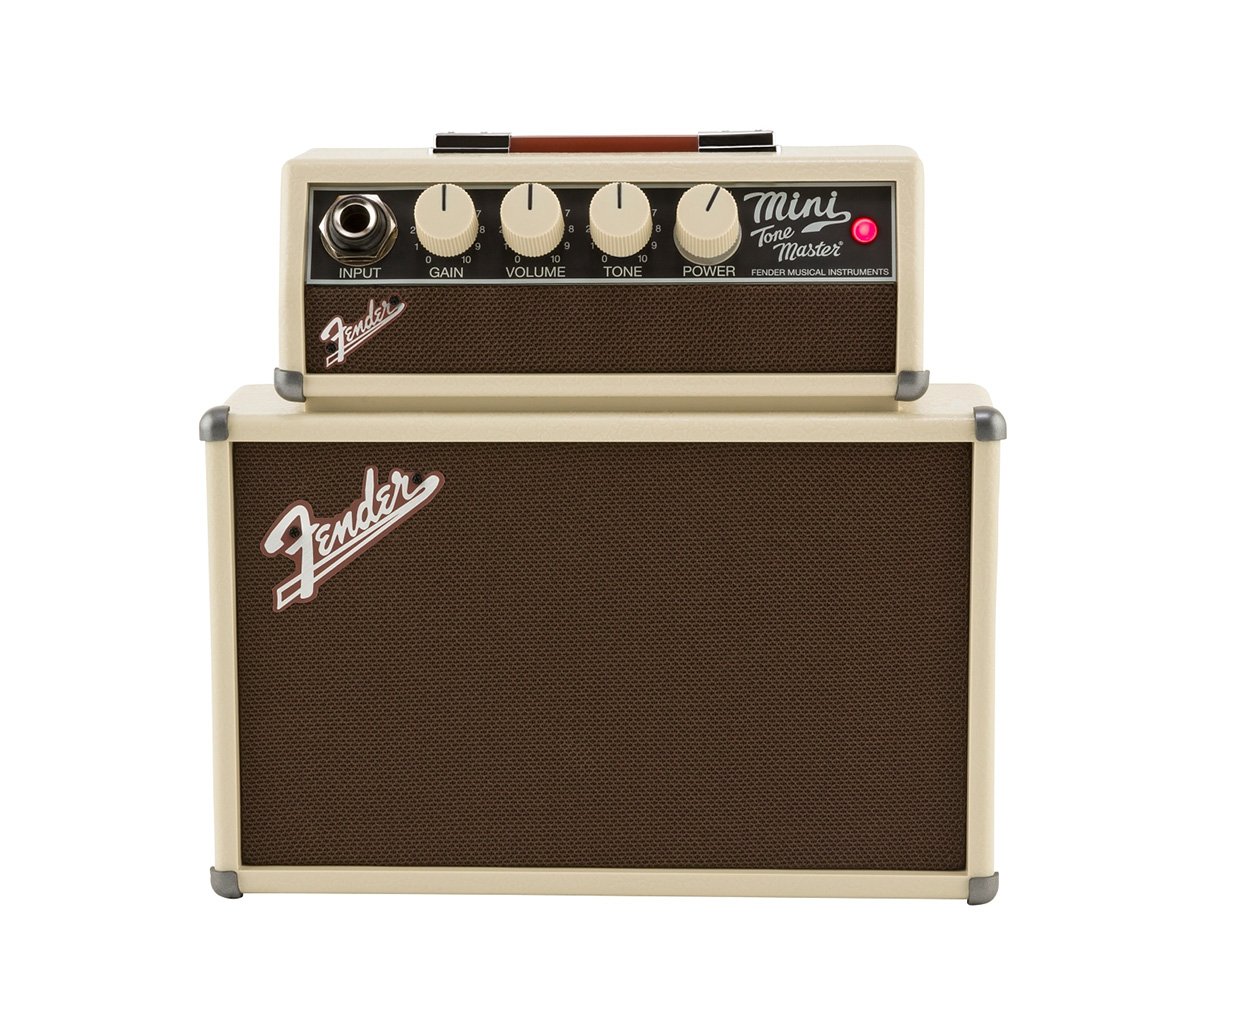 Fender Mini Tone-Master Amp